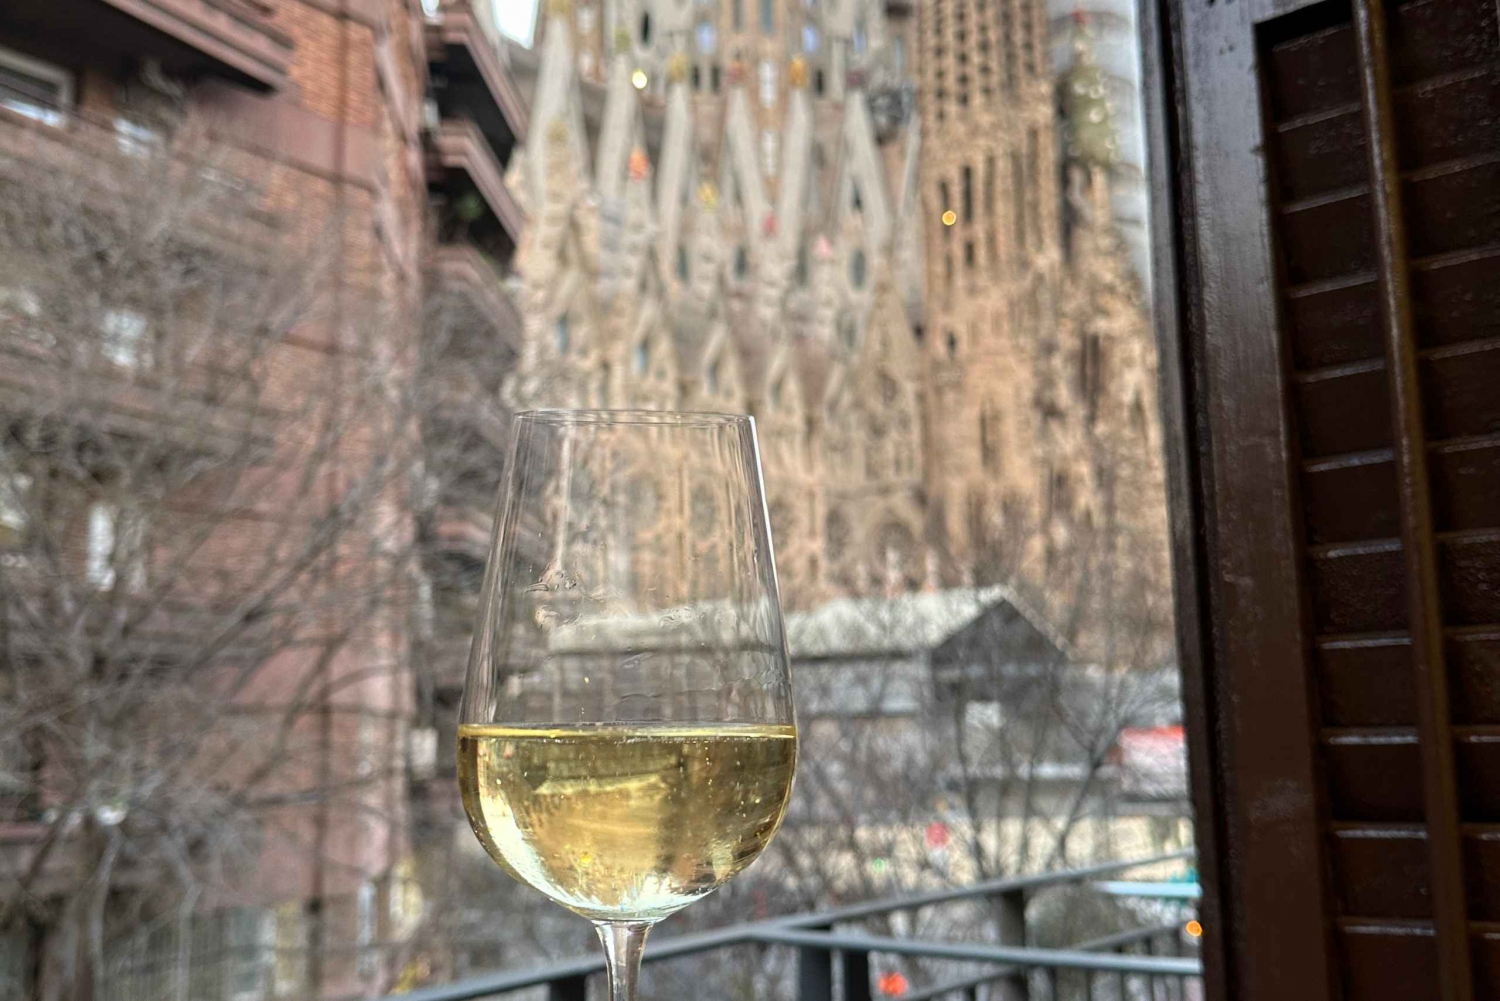 Barcelona: Cata de vinos z widokiem na Sagrada Familia